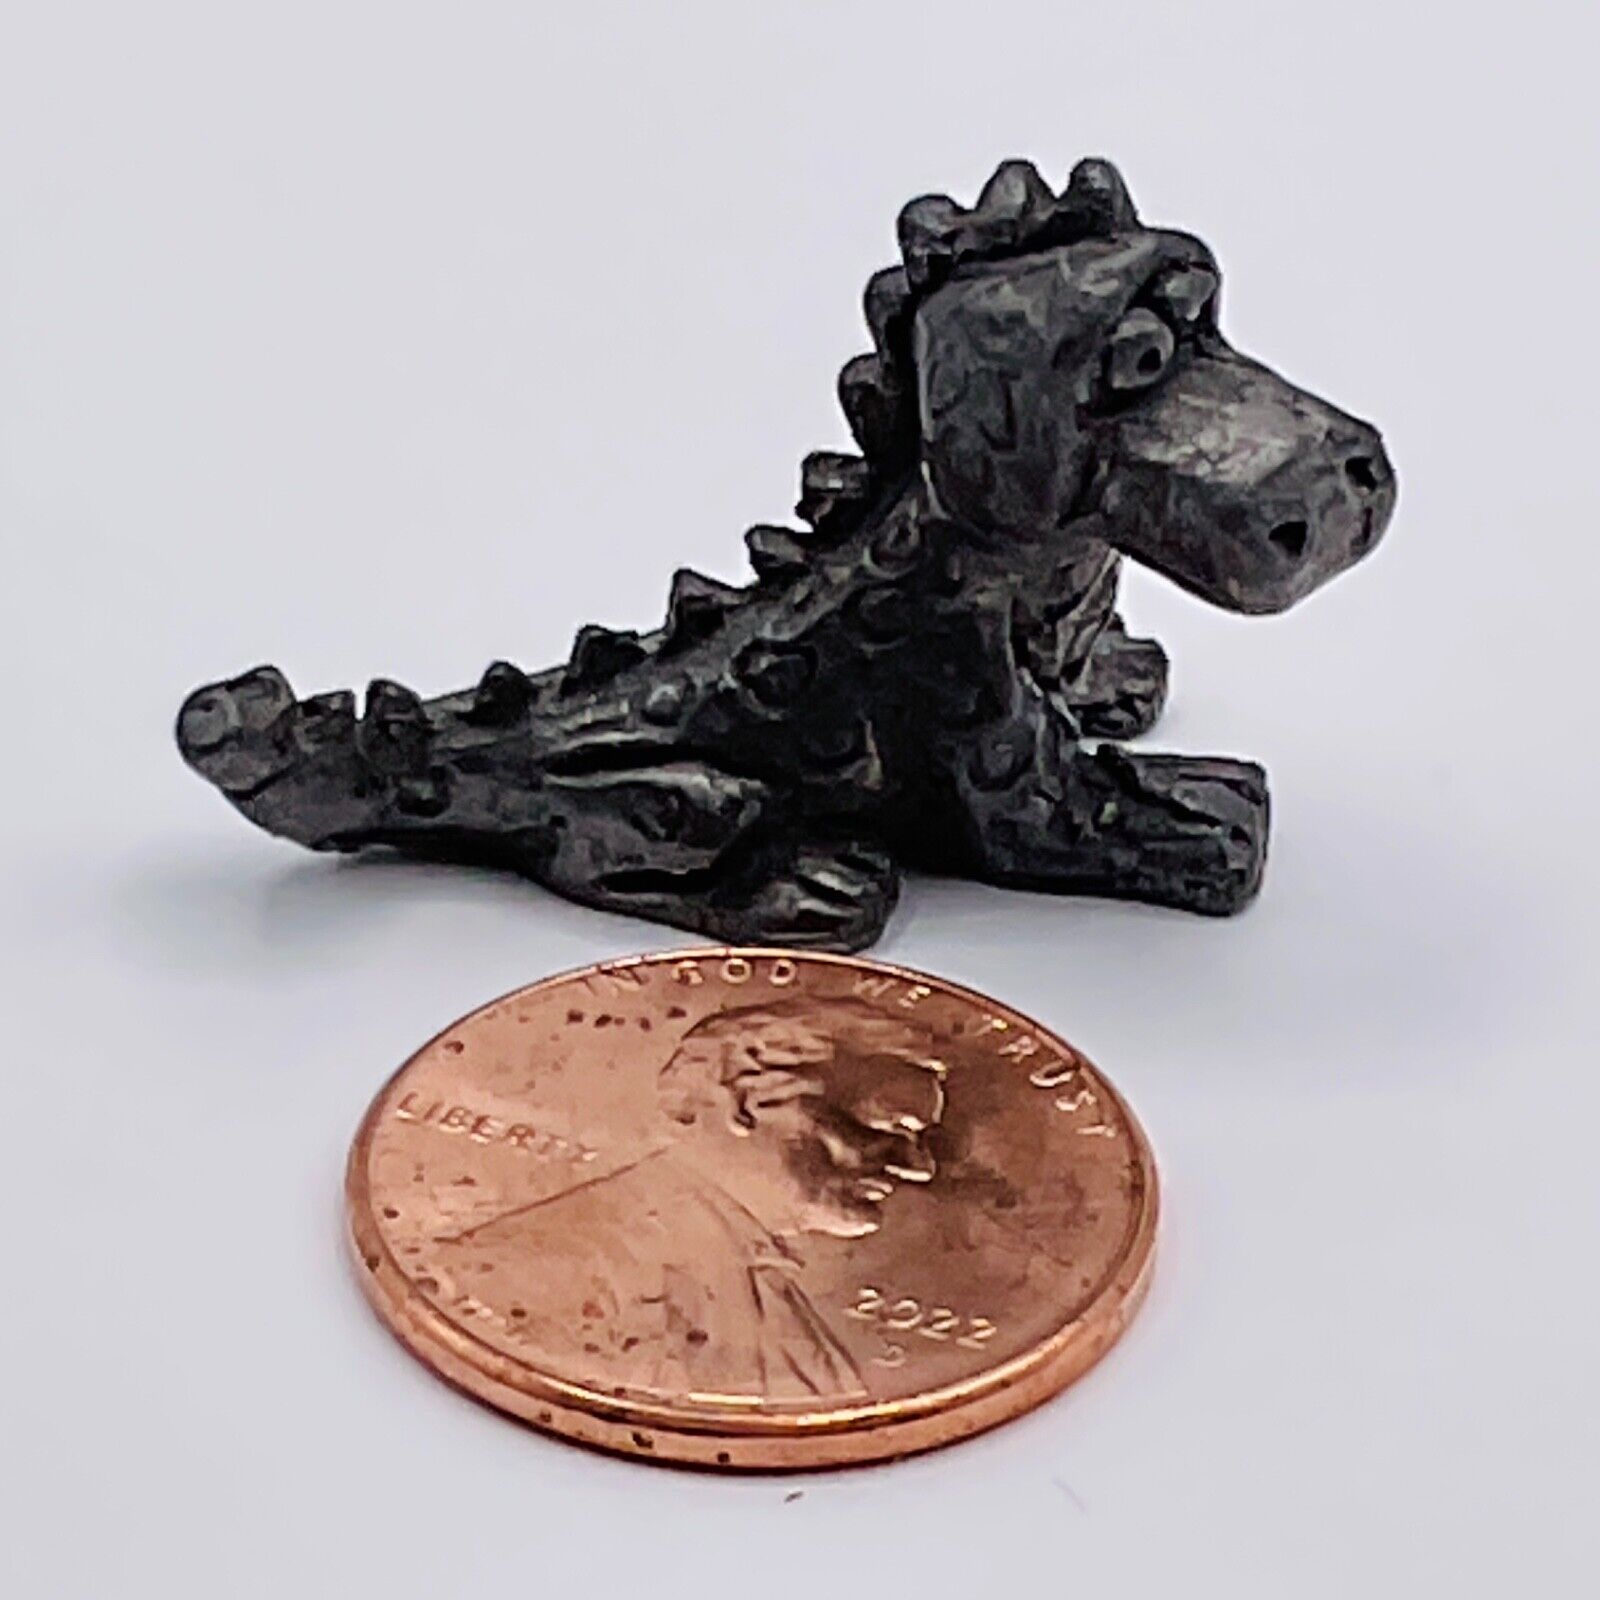 VTG Dragon Small Miniature Pewter Figurine Silver Black Fantasy Mythical Creatur